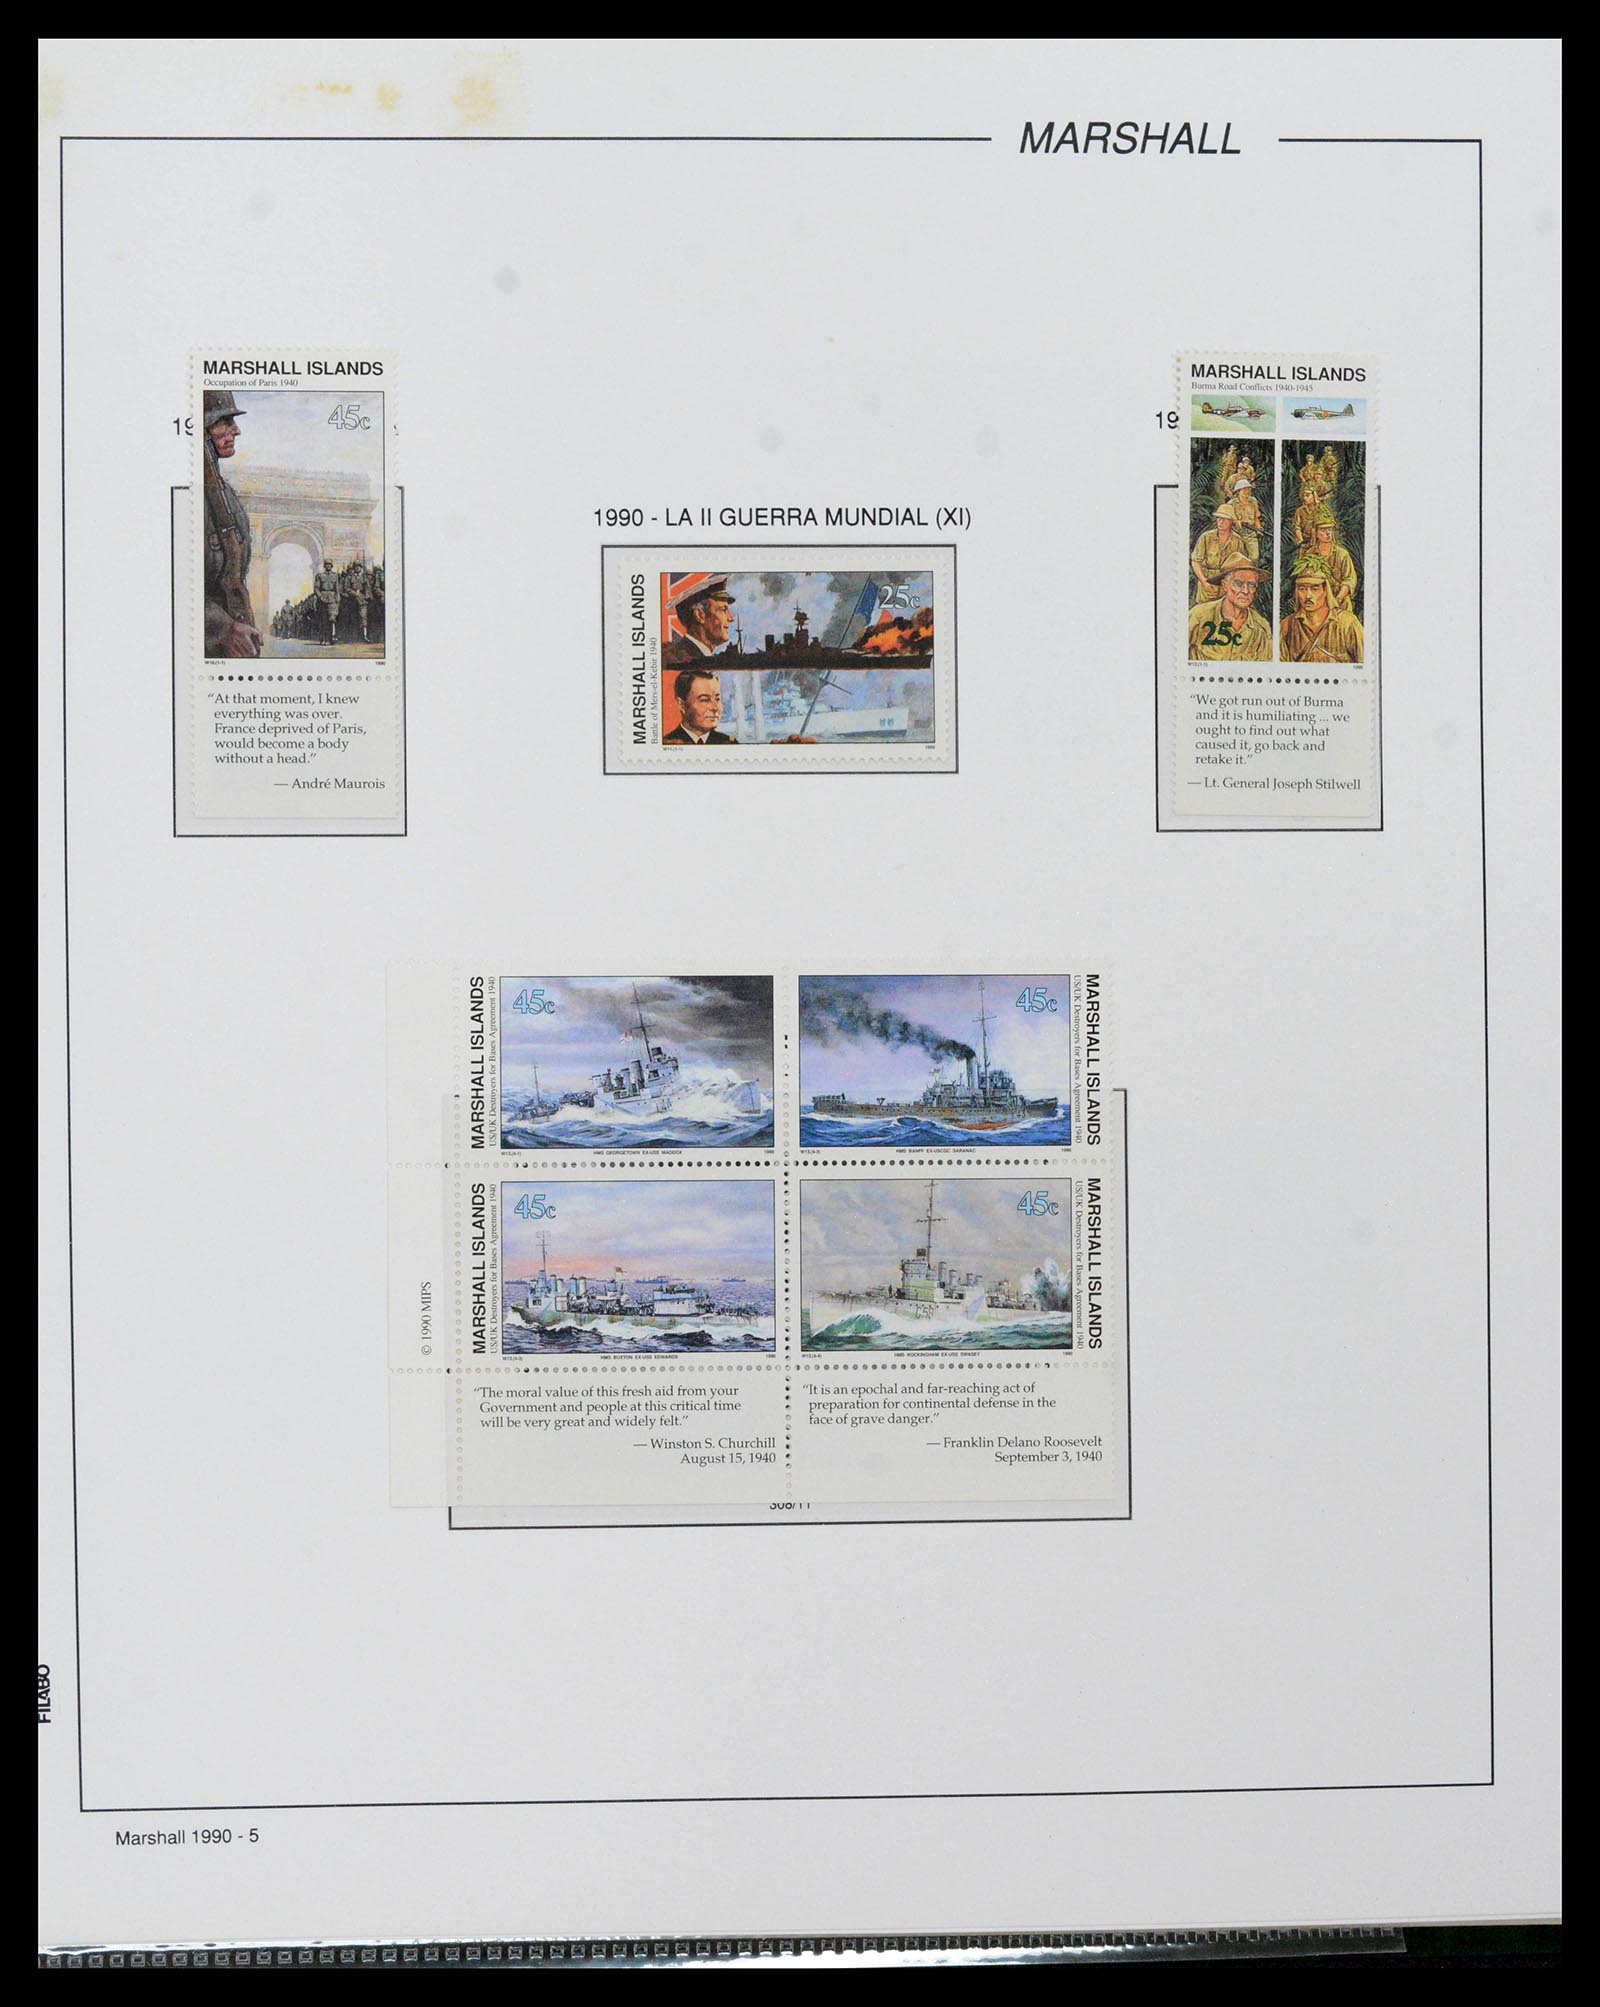 39222 0147 - Stamp collection 39222 Palau, Micronesia and Marshall islands 1980-1995.